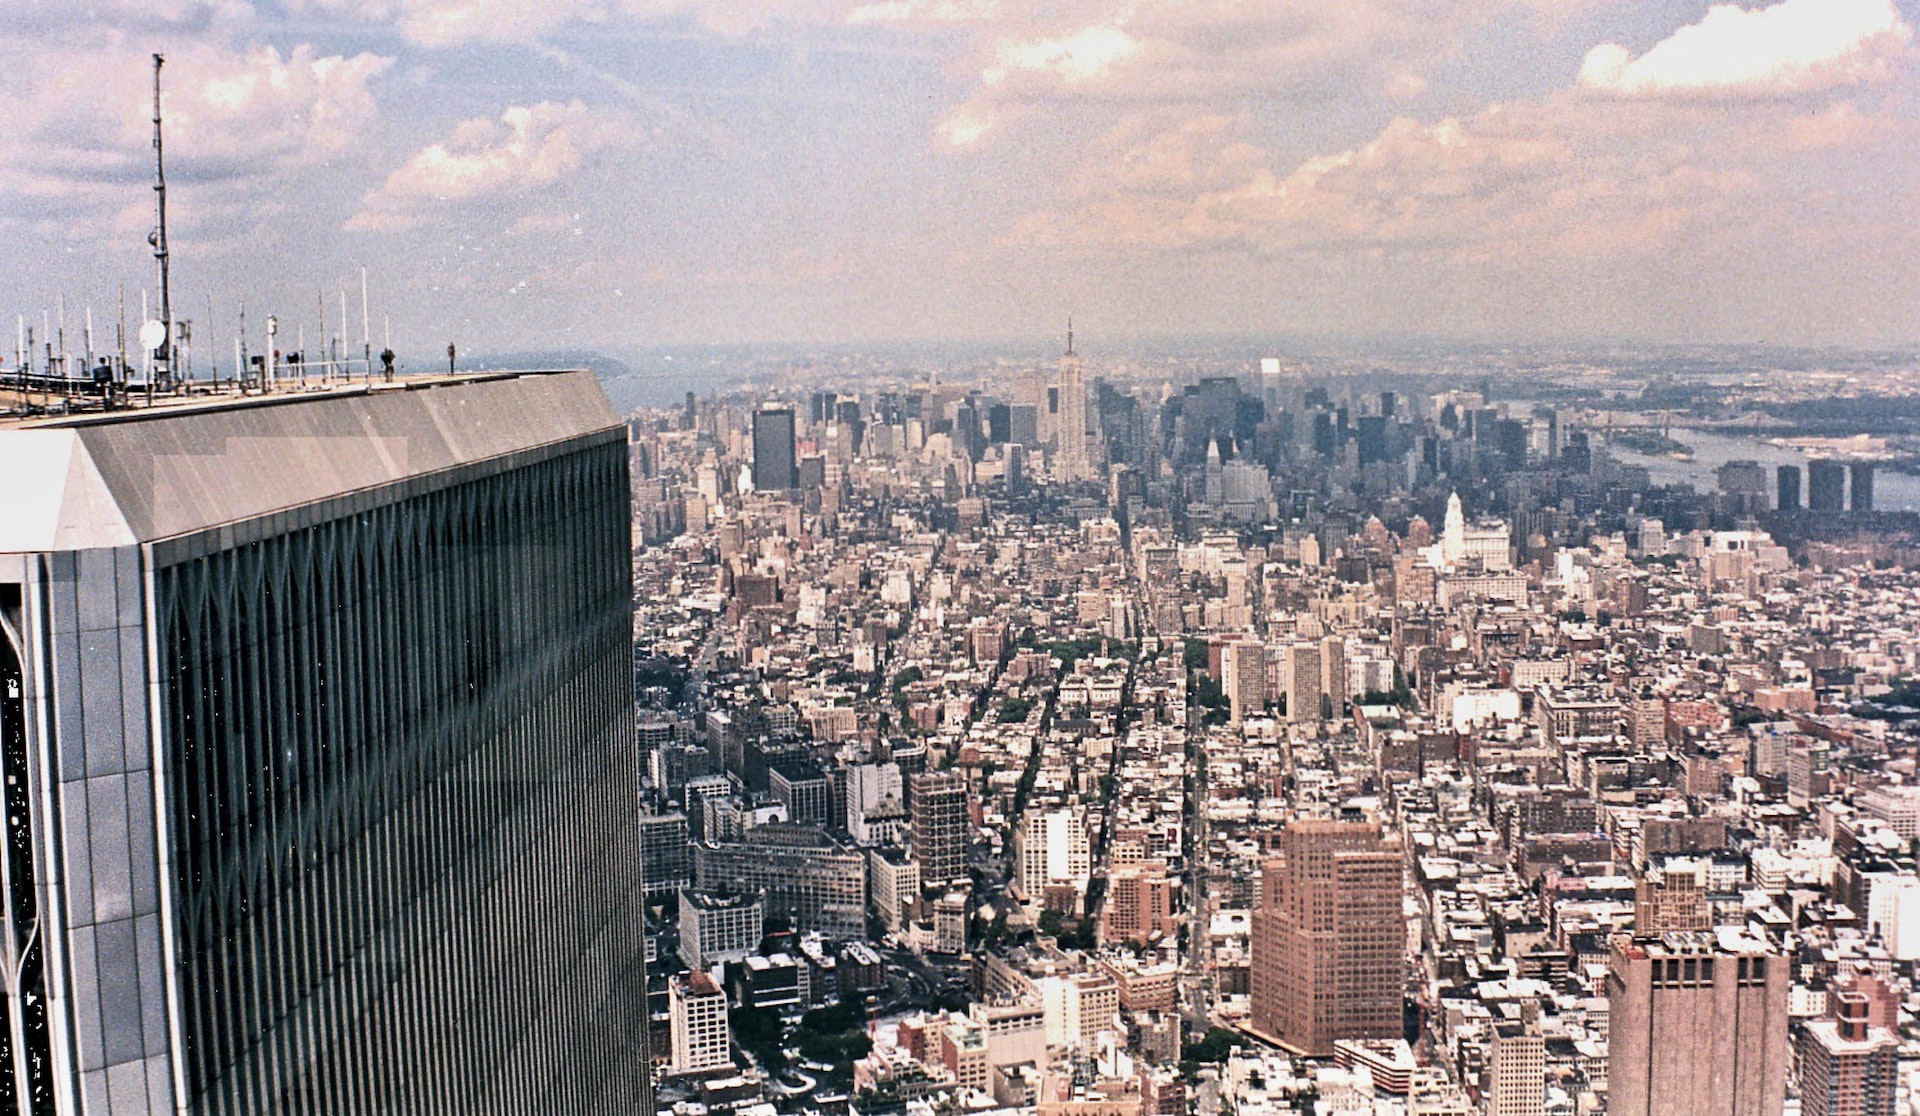 World Trade Center historic photo